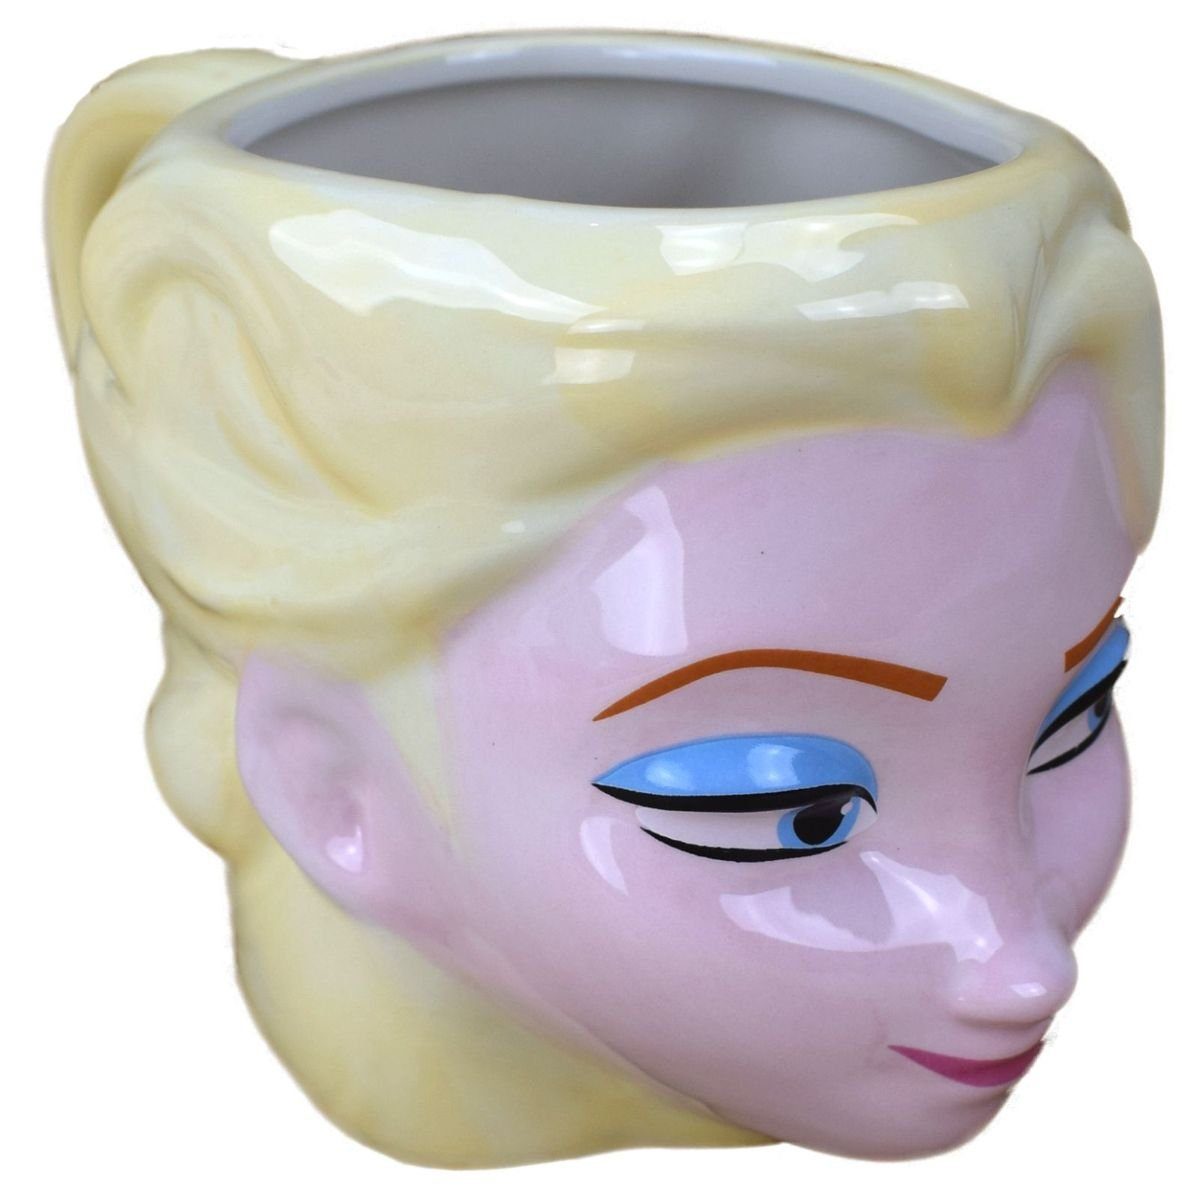 Stor Tasse Motivtasse Keramiktasse Kopf Elsa 3D Disneys Frozen Becher Geschenk, Keramik, 3D